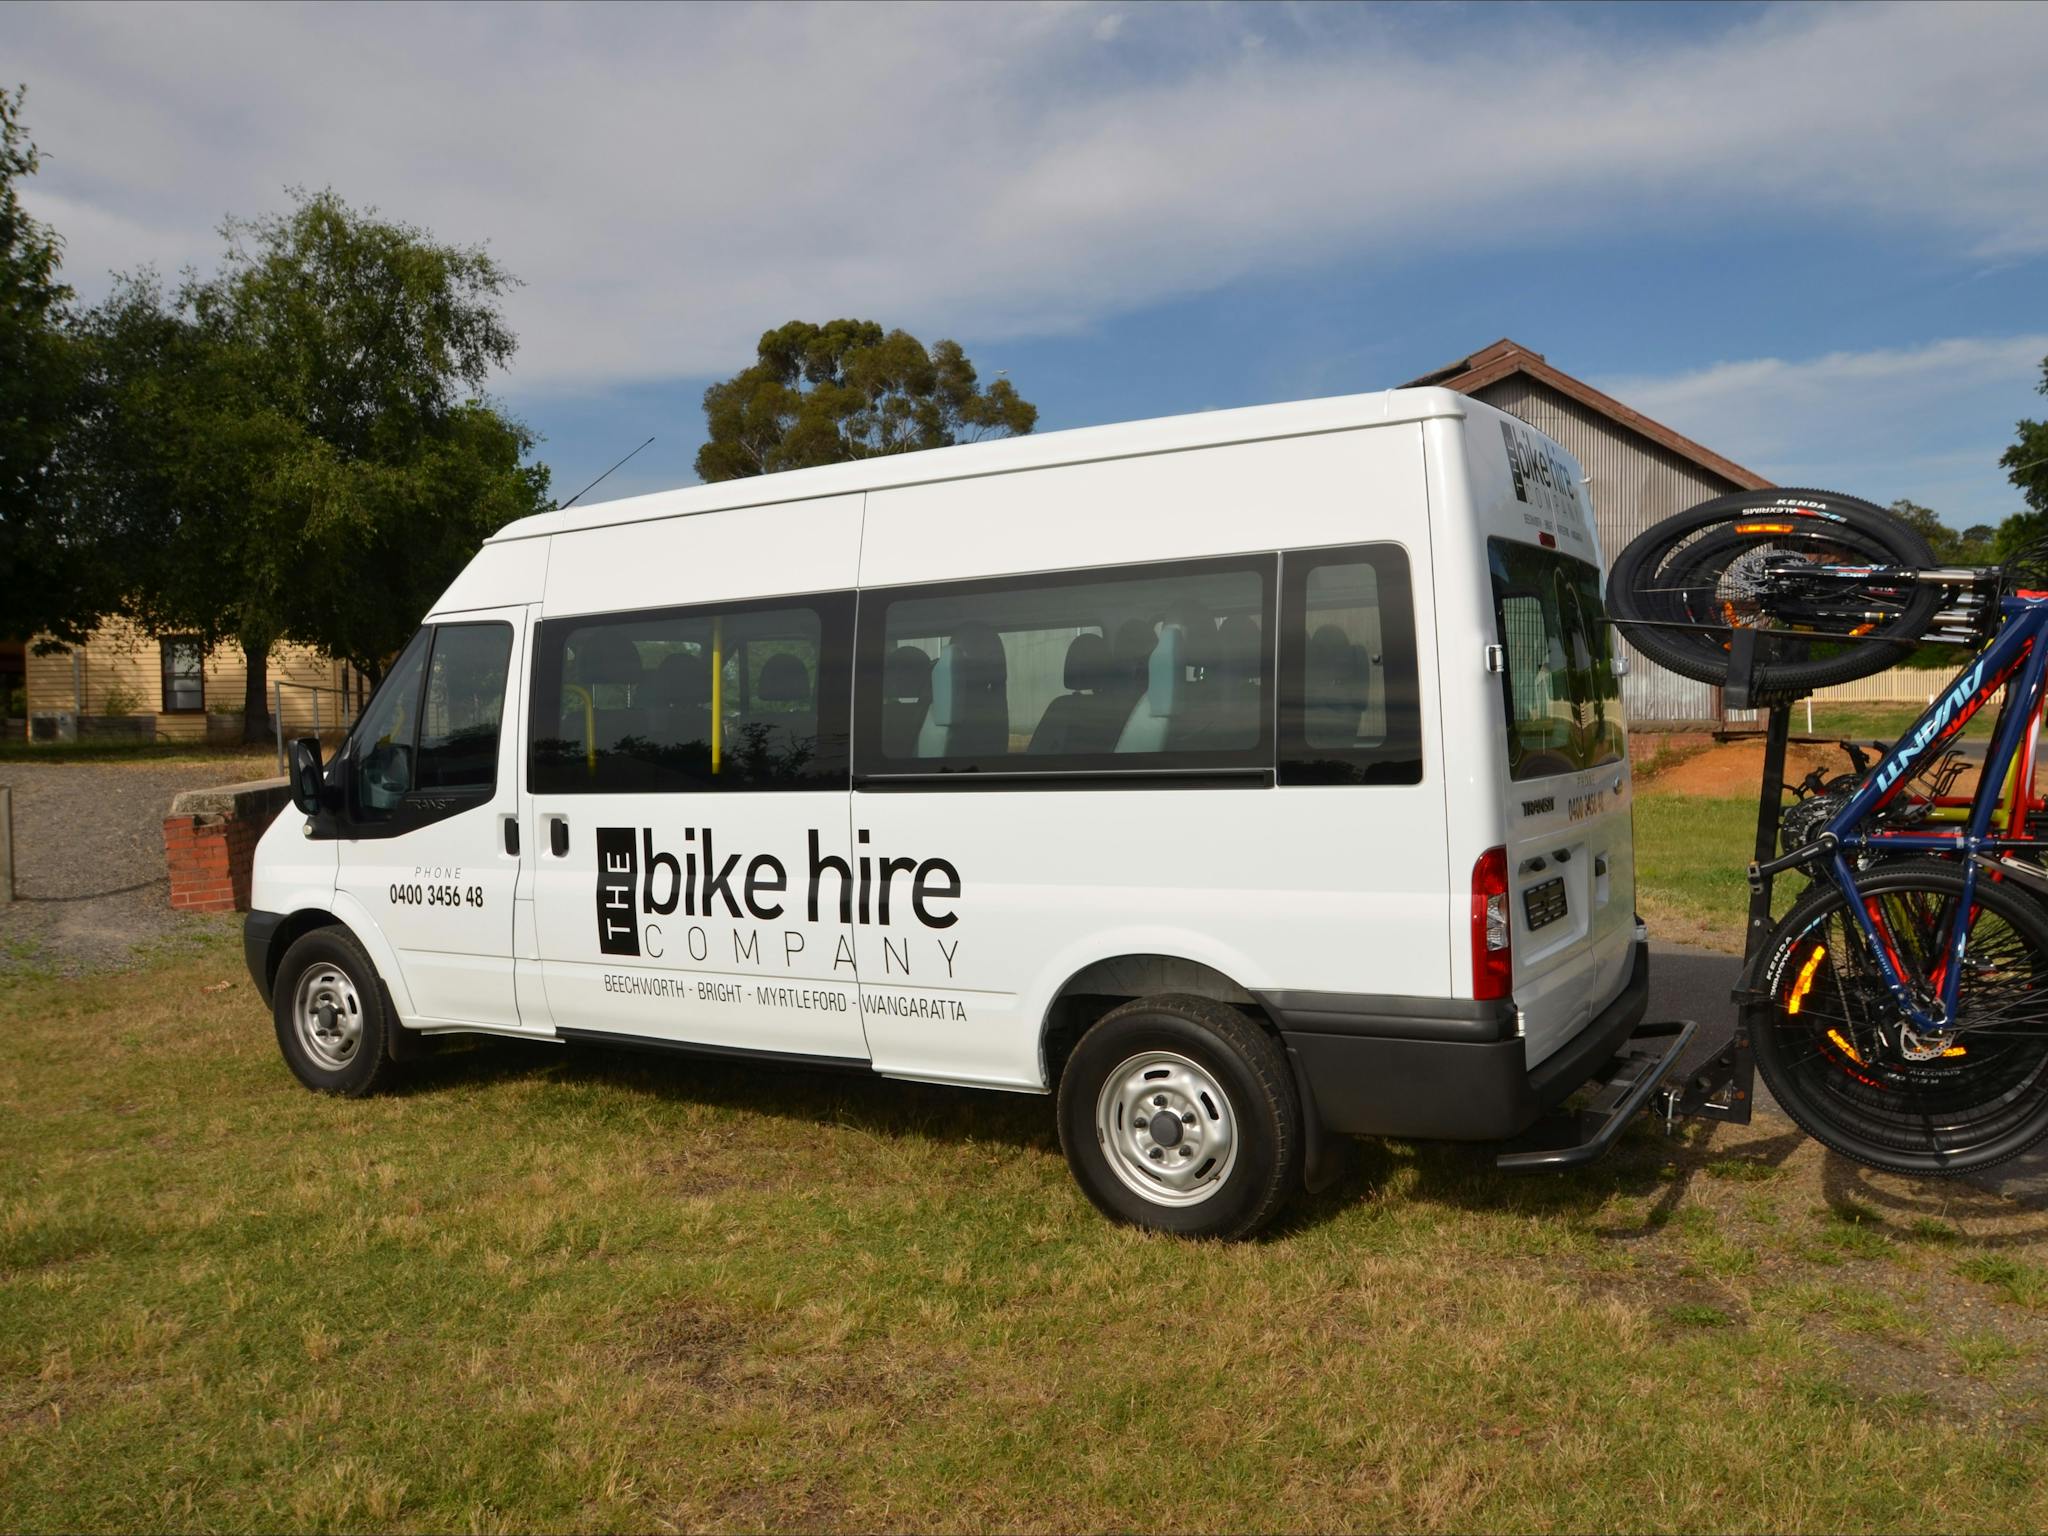 The Bike Hire Company